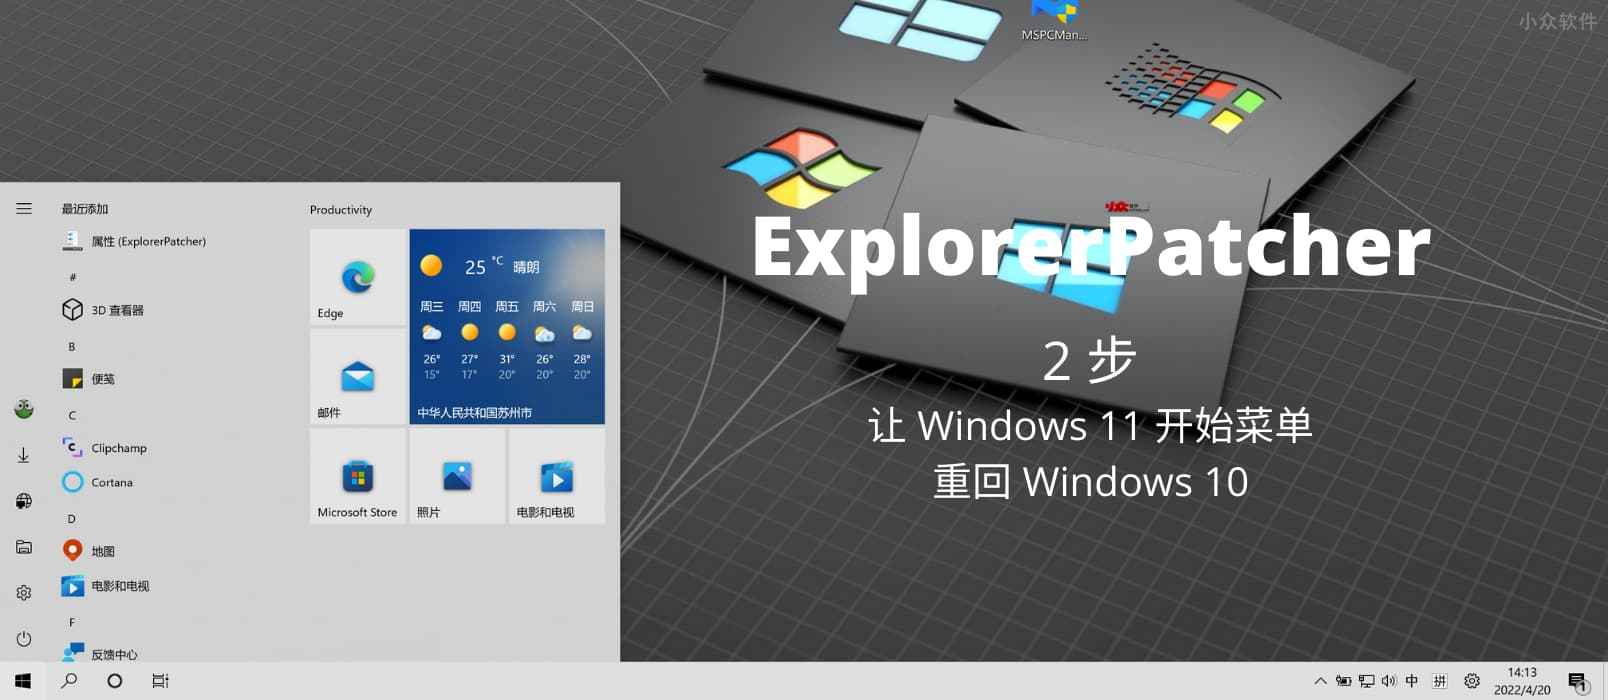 ExplorerPatcher – 2 步让 Windows 11 开始菜单重回 Windows 10，或者反过来